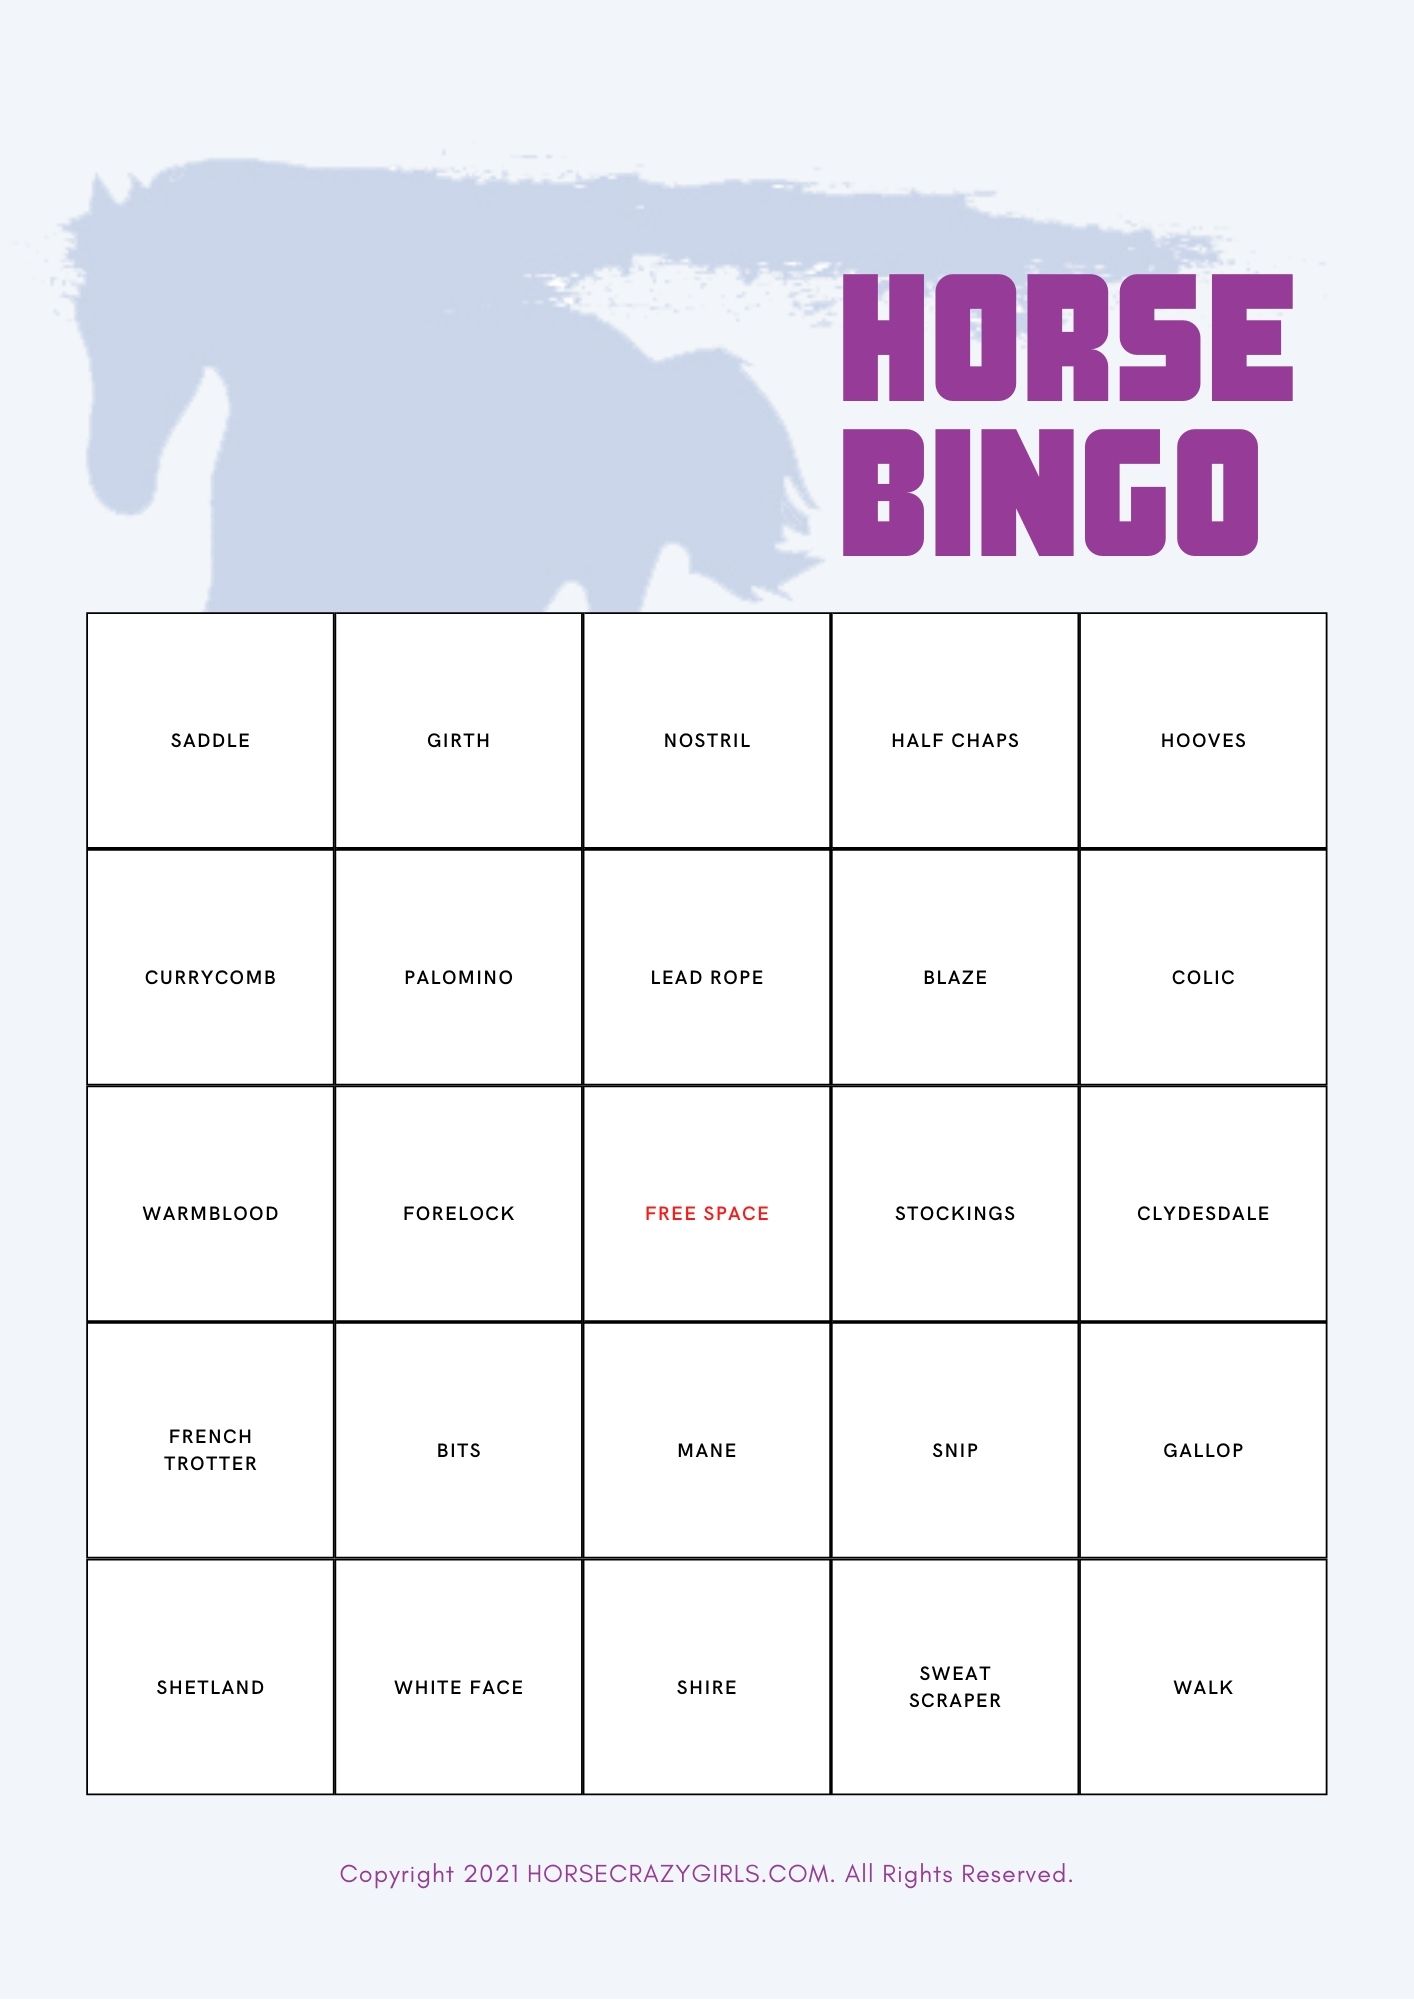 A bingo card with a horse theme.